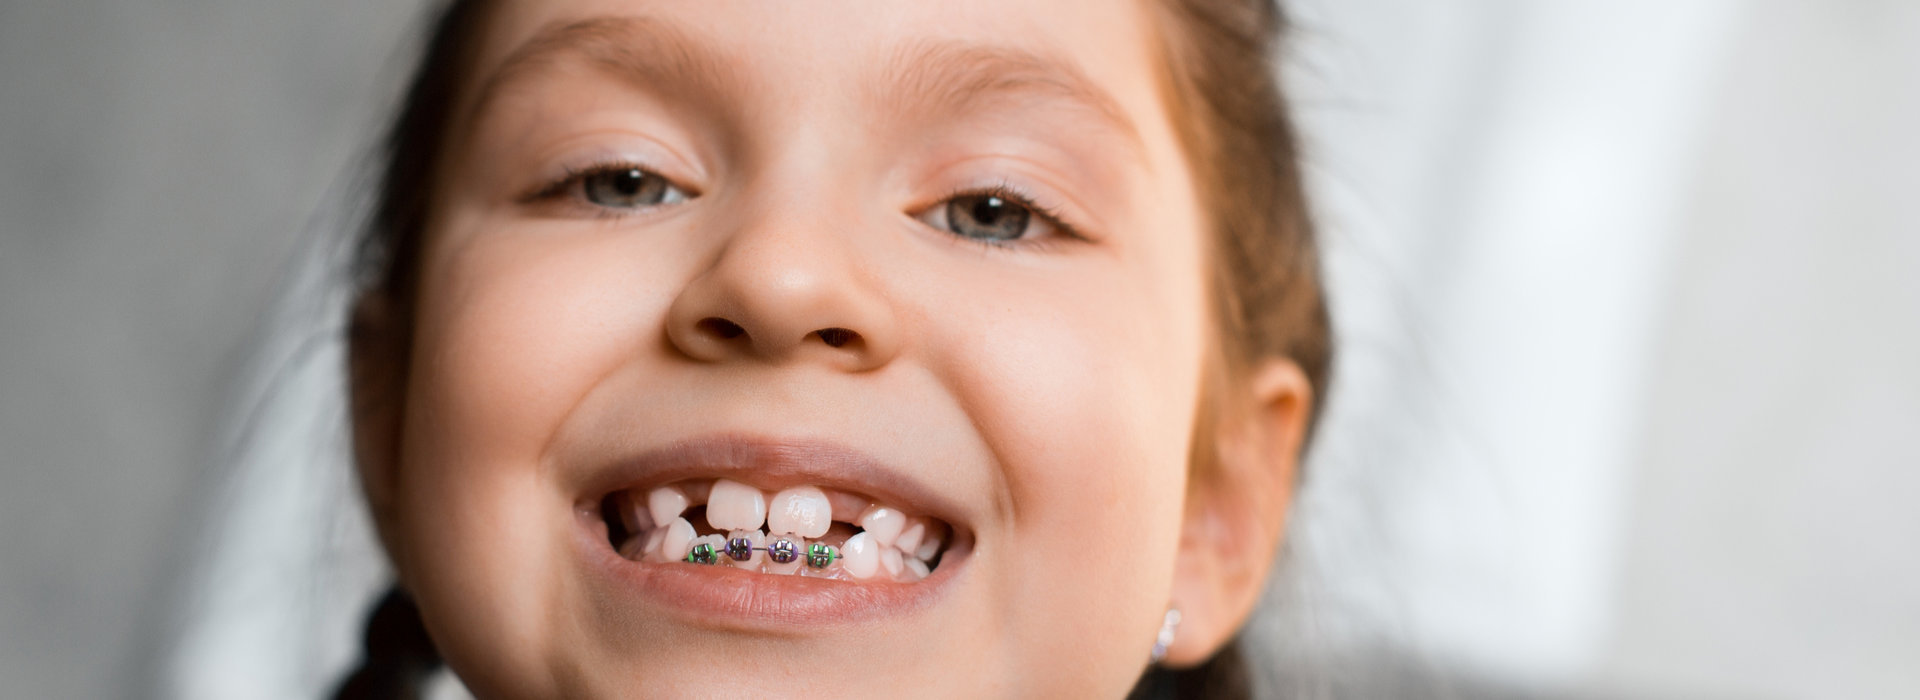 South OC Pediatric Dentistry & Orthodontics - Blog